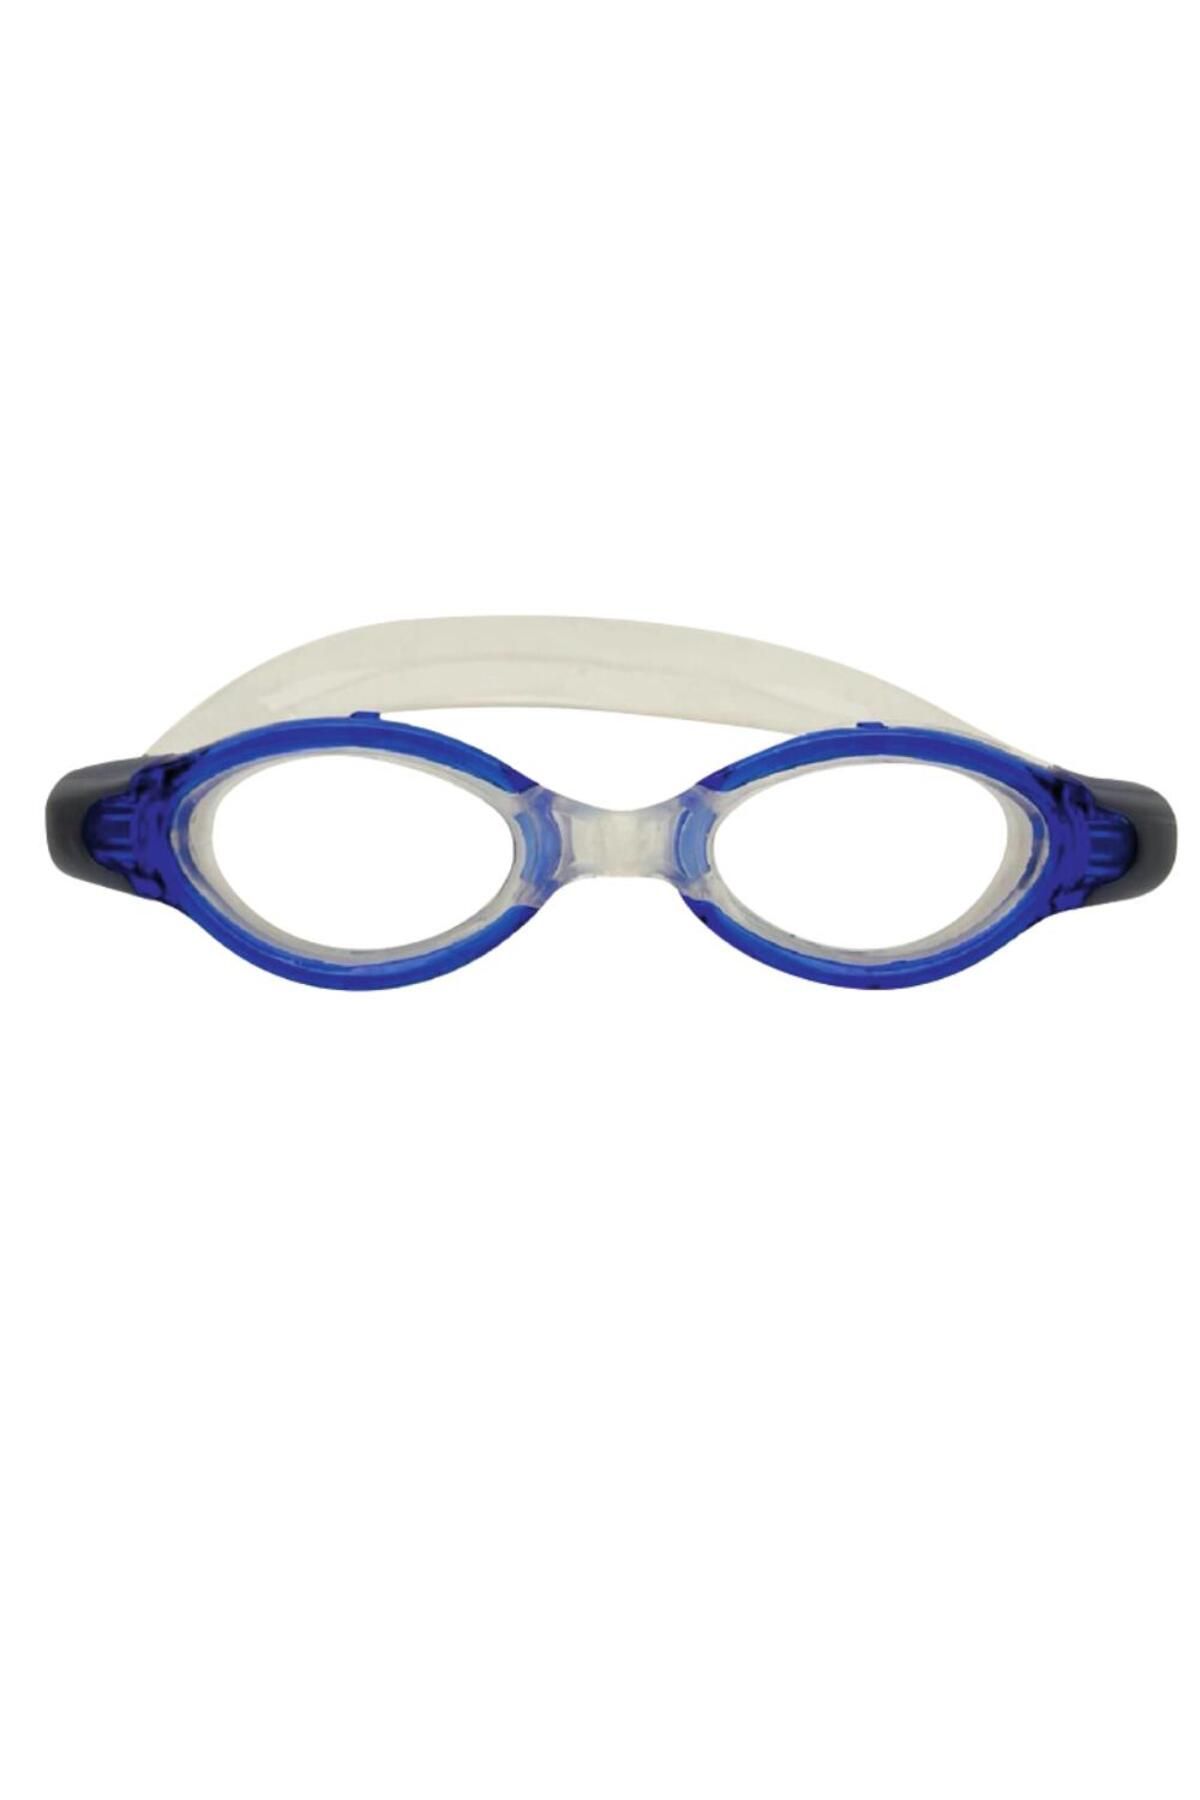 Lisinya Silikon Yüzücü Gözlüğü Antifog - GS5A (Lisinya)